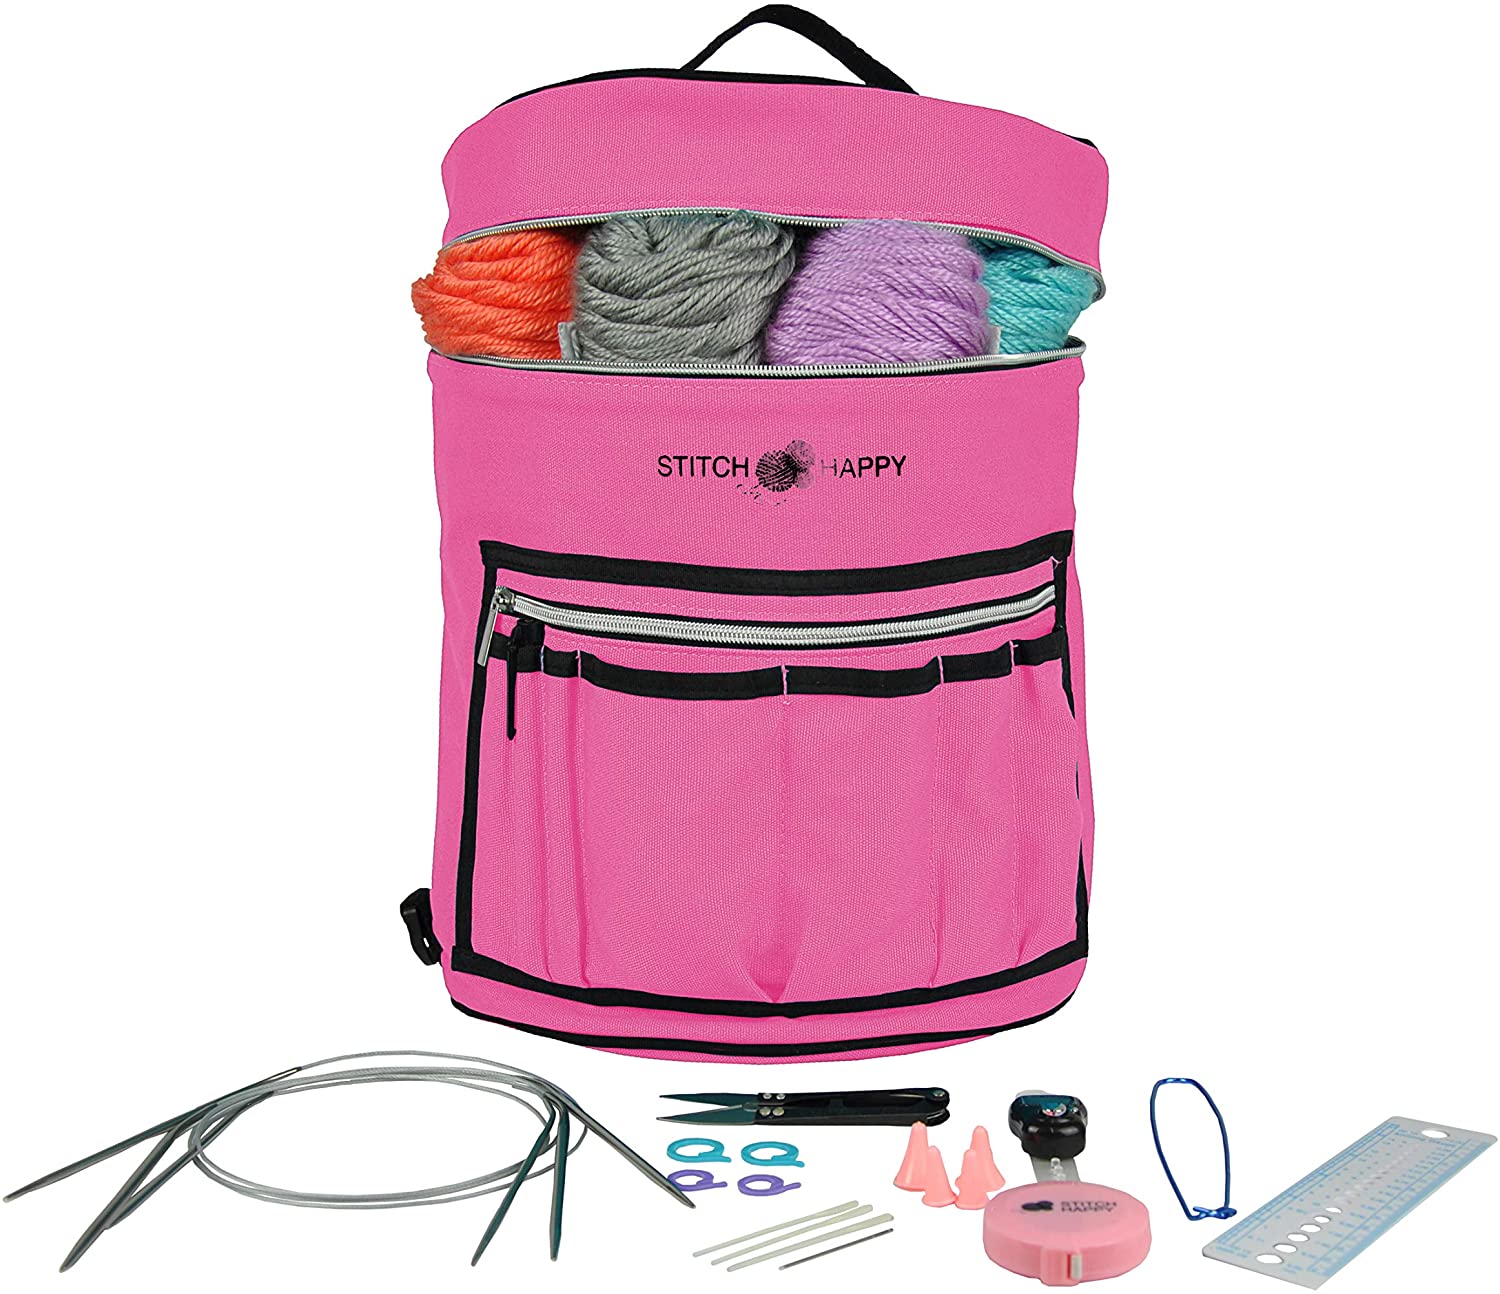 Stitch Happy Travel Bag & Starter Equipment Knitting Kit